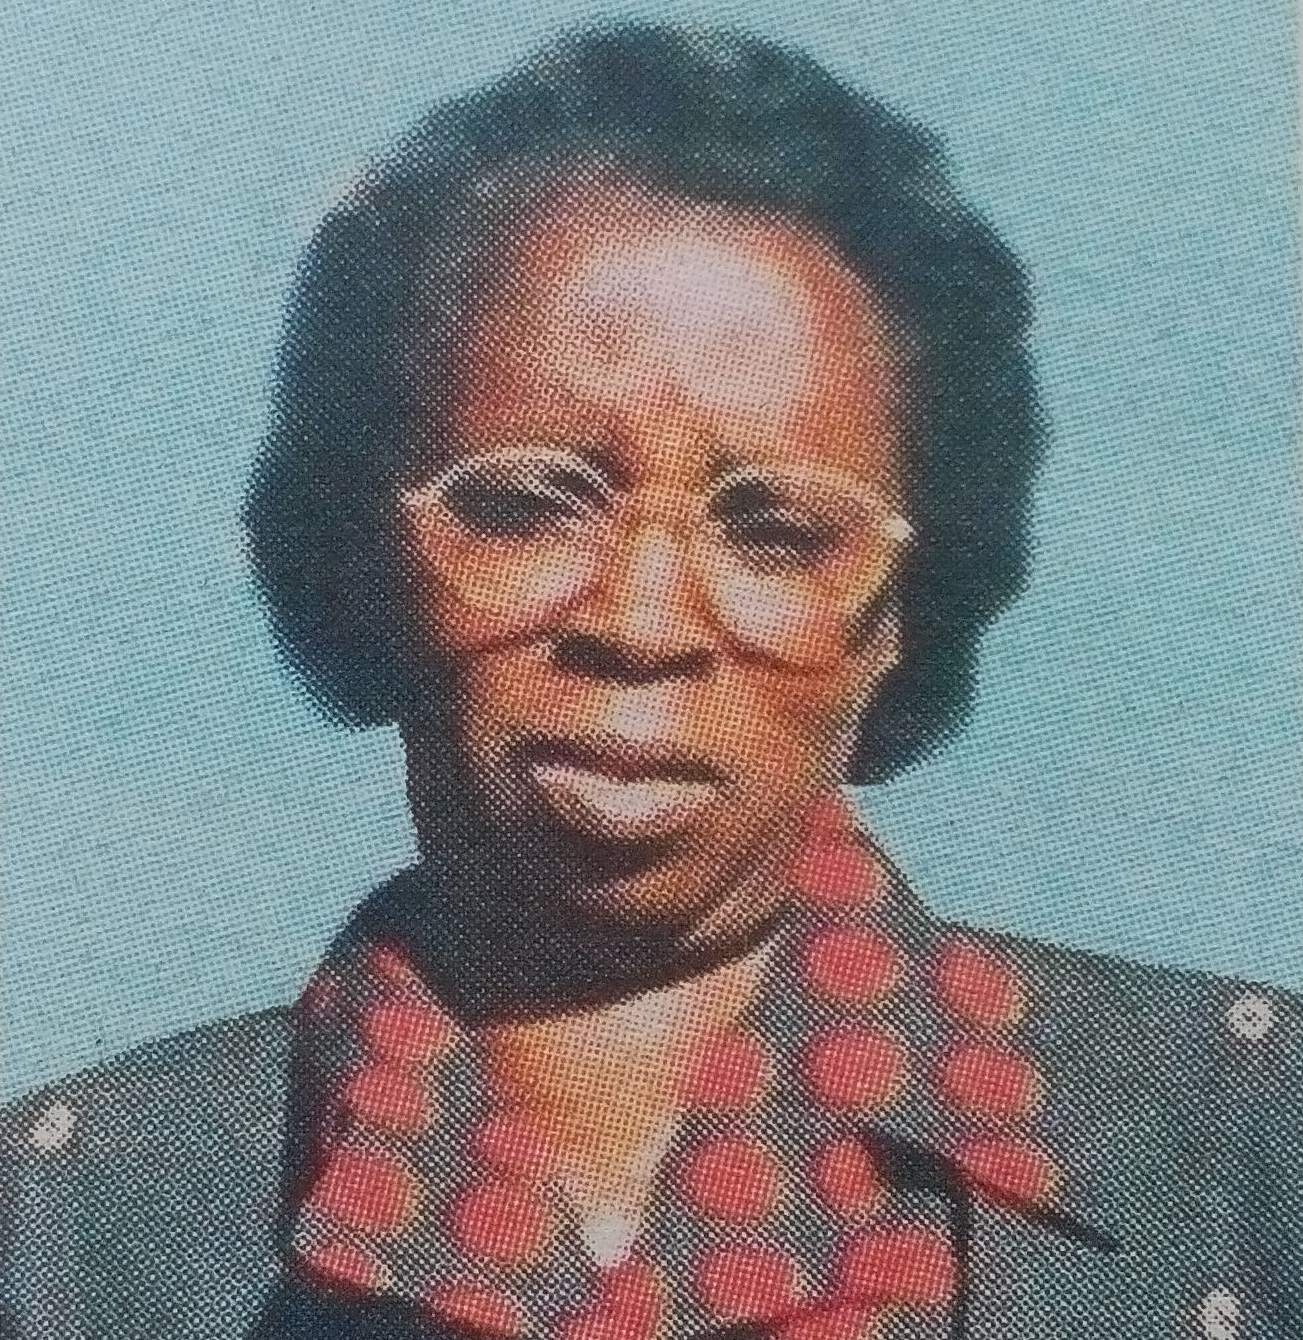 Obituary Image of Felista Wangui Ng'ang'a (Mama Kamau)